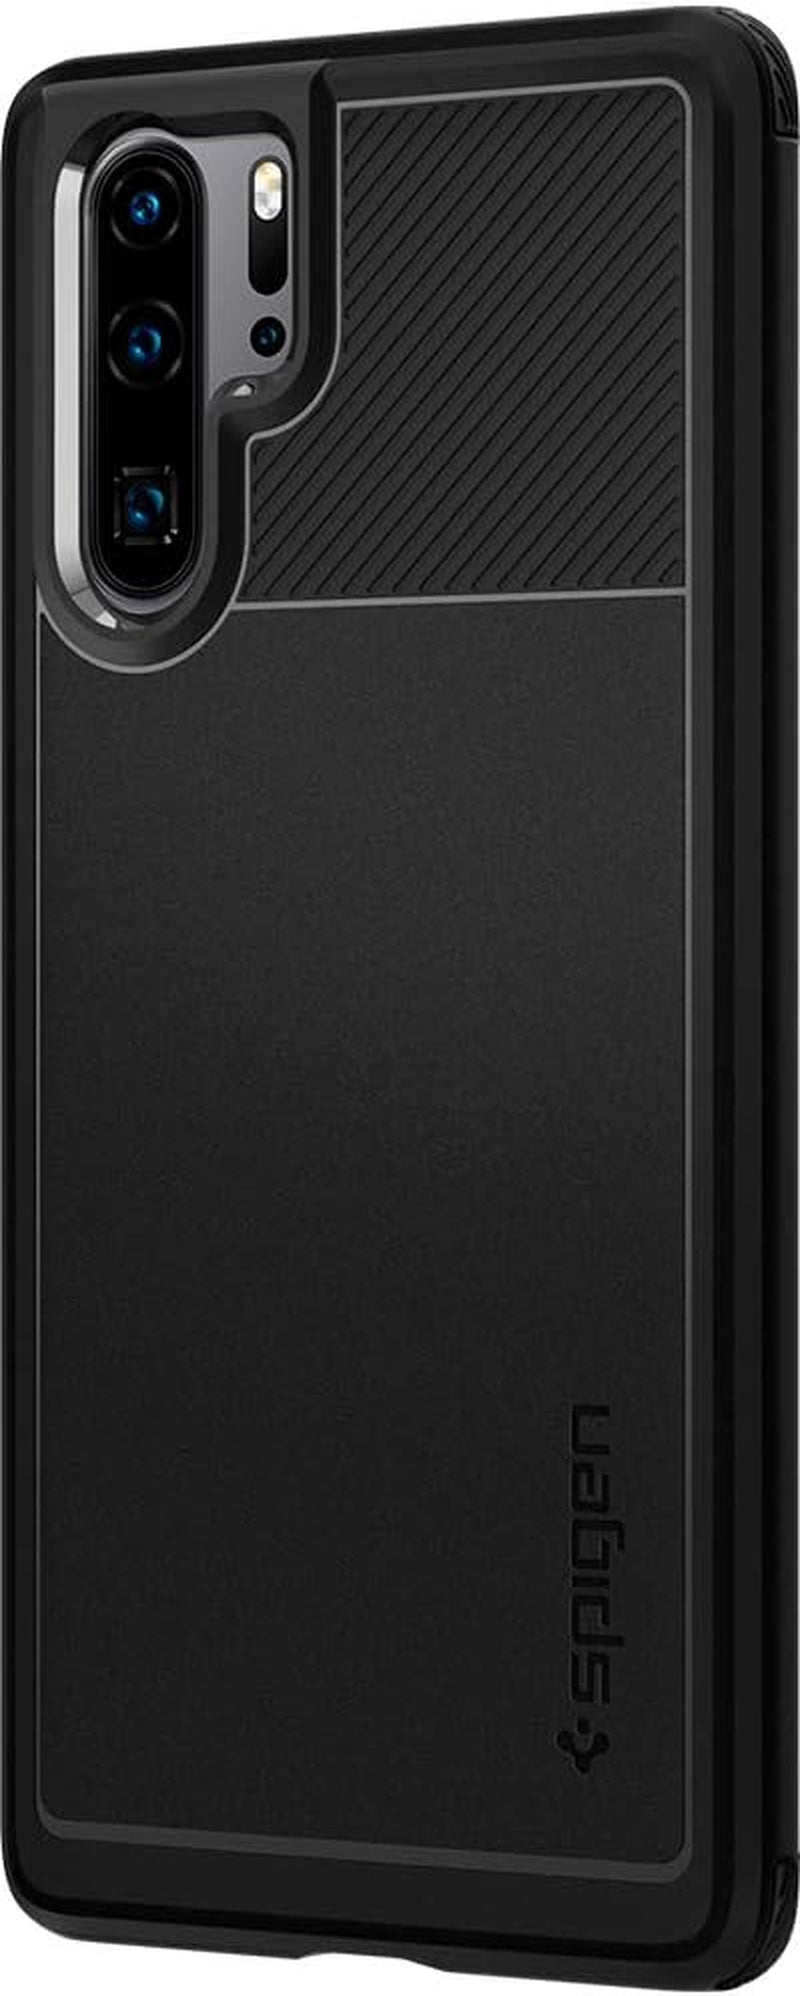 Spigen Rugged Armor Matte Black Case - For Huawei P30 Pro - mosaccessories